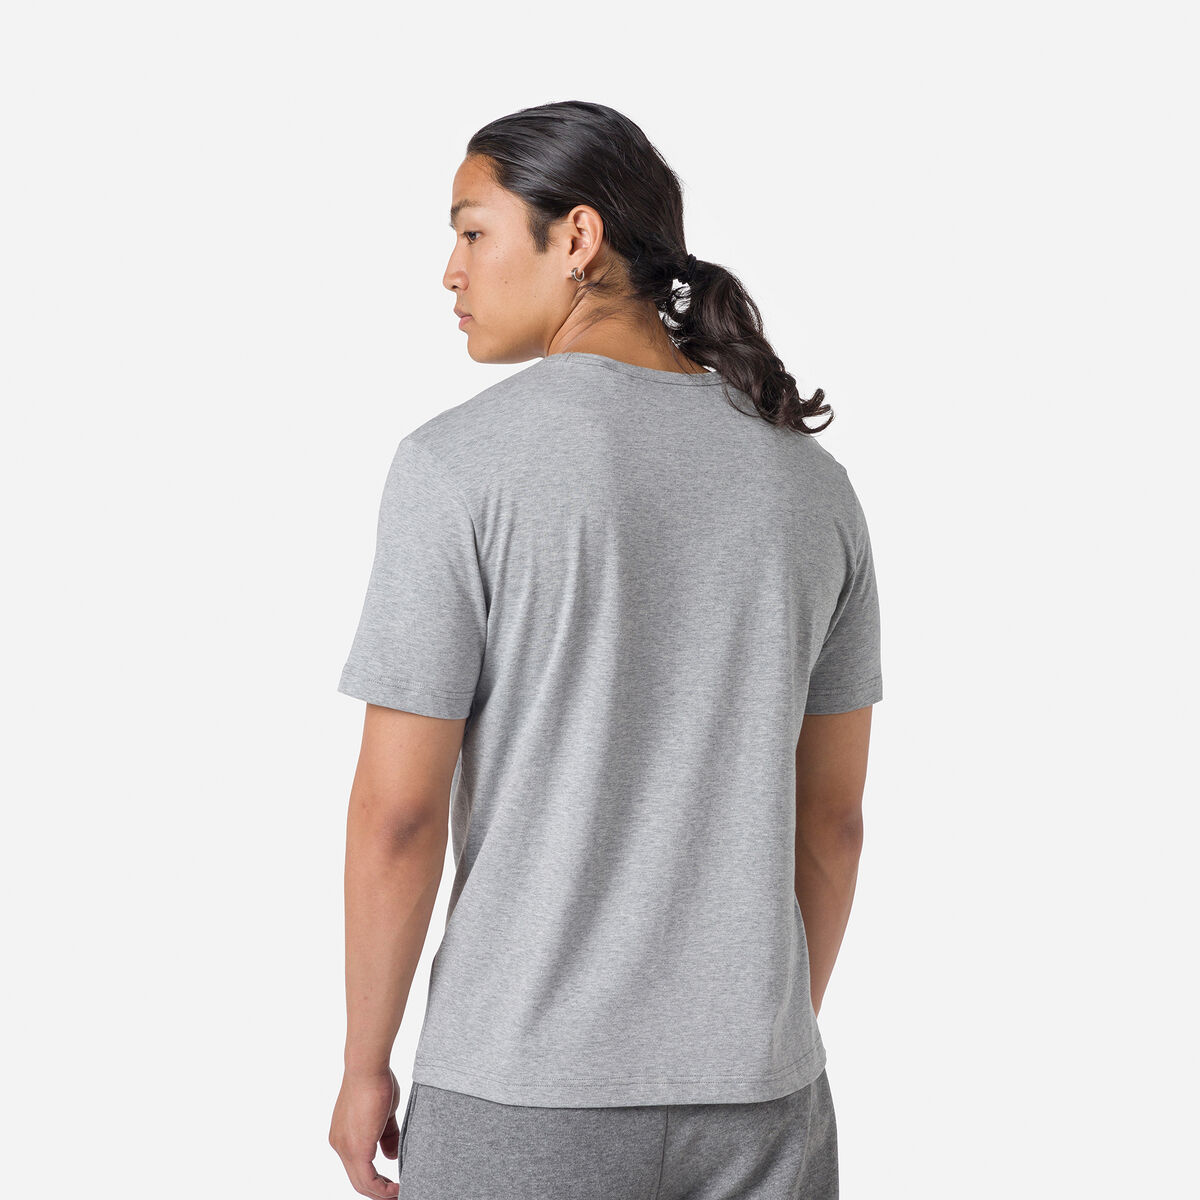 Rossignol T-shirt uomo logo Grey